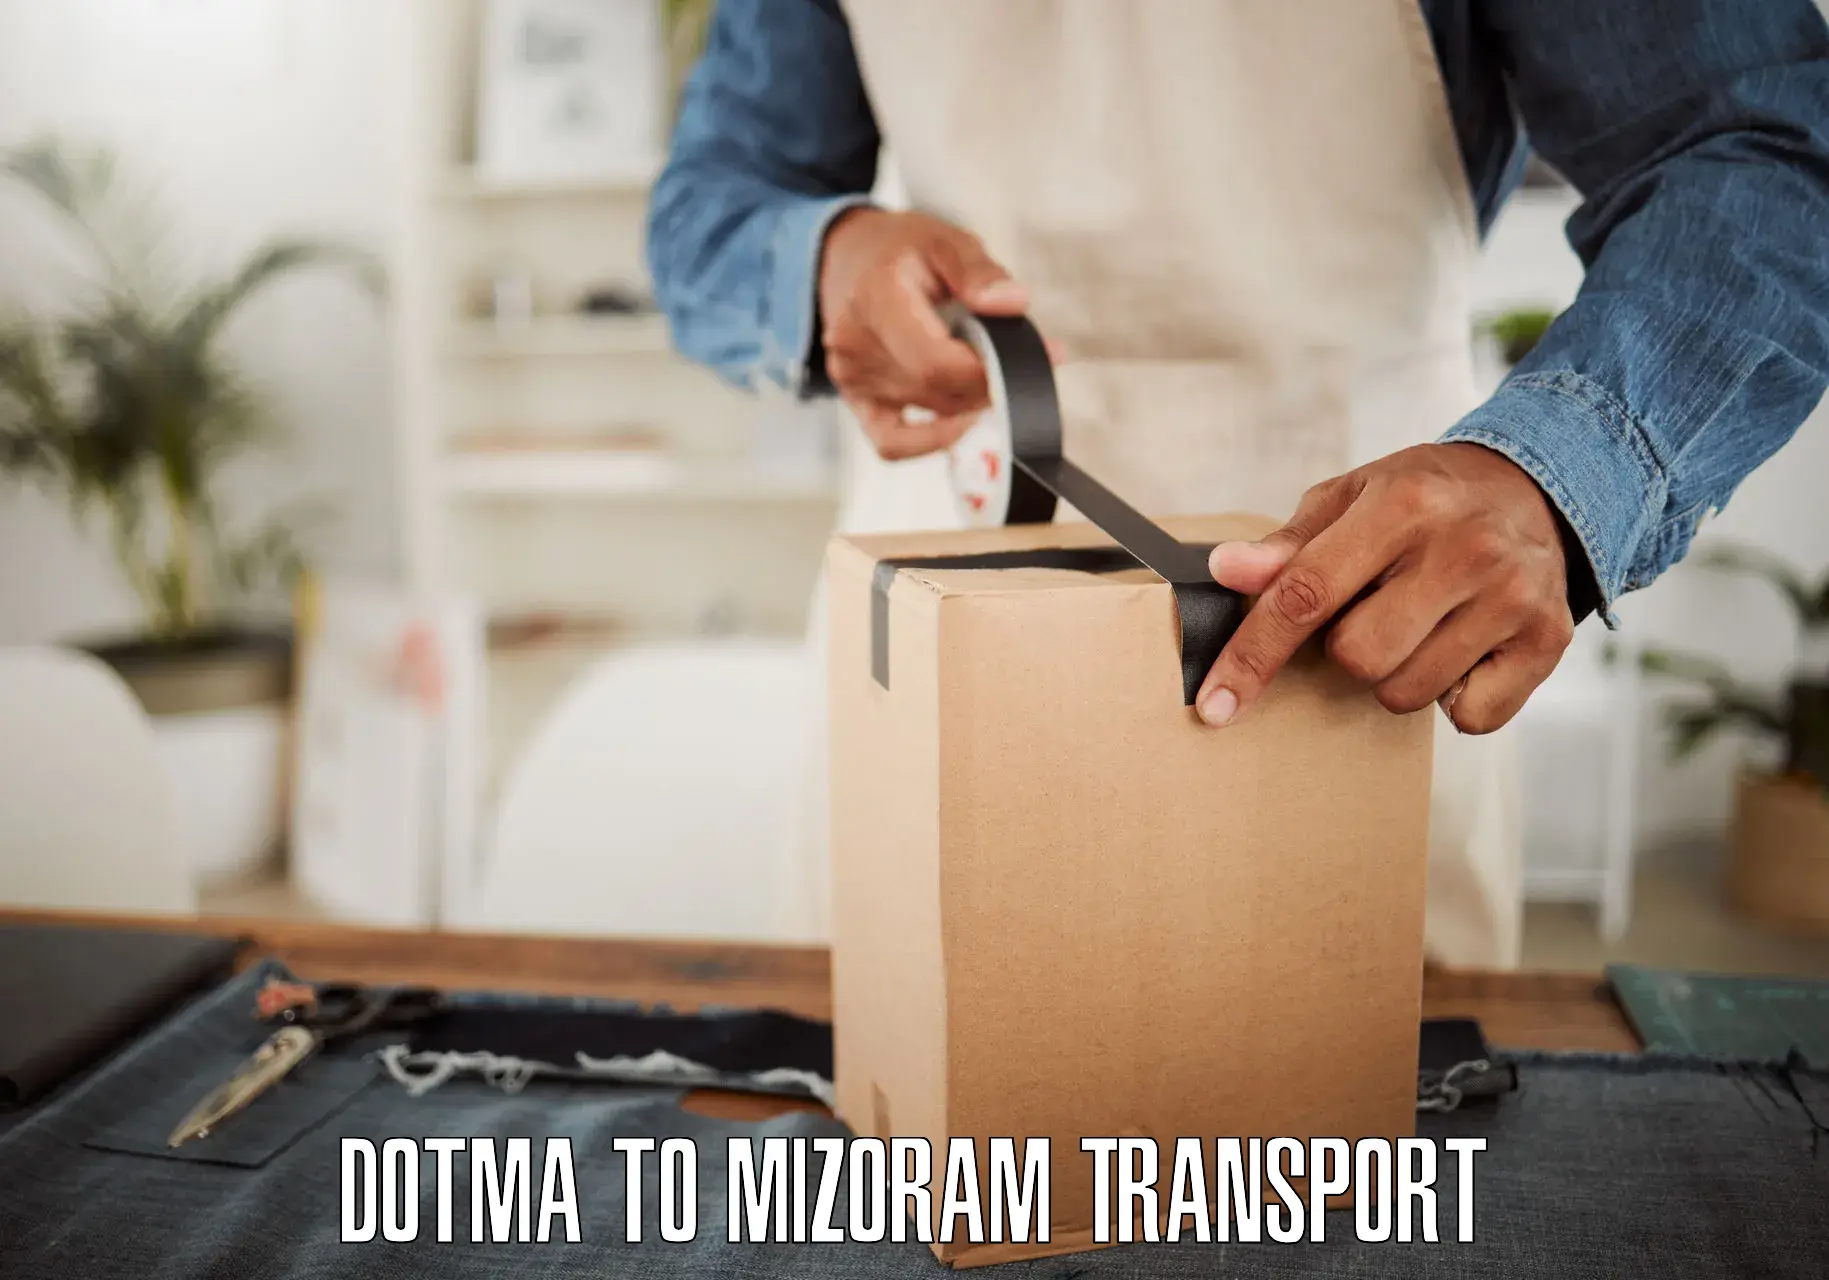 Cargo train transport services Dotma to Mizoram